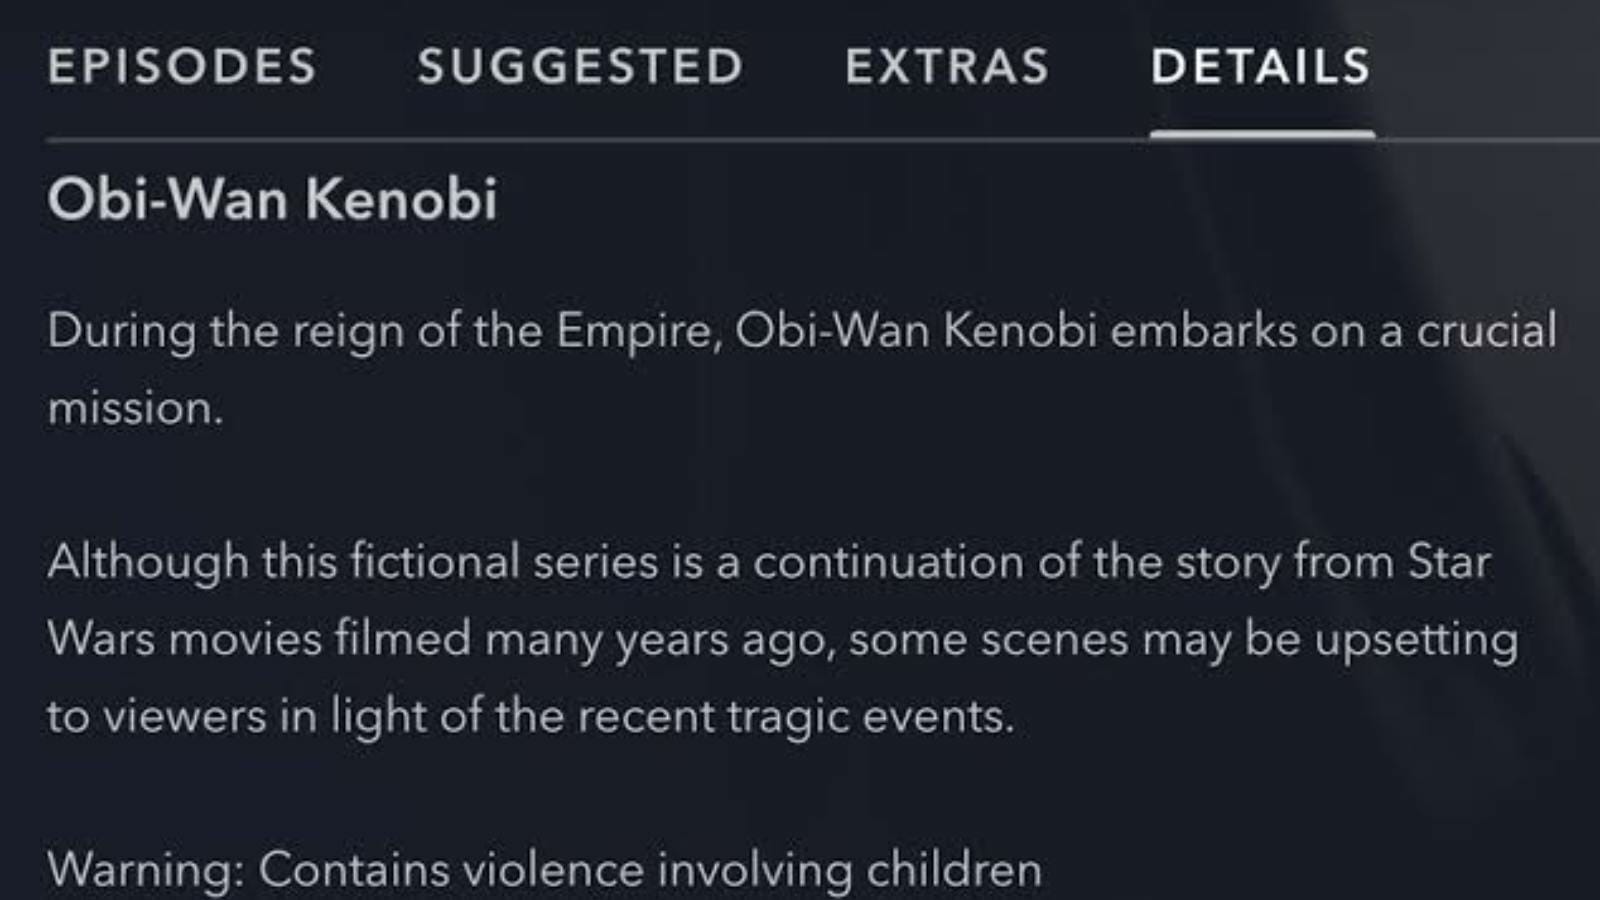 The warning of Obi-Wan Kenobi